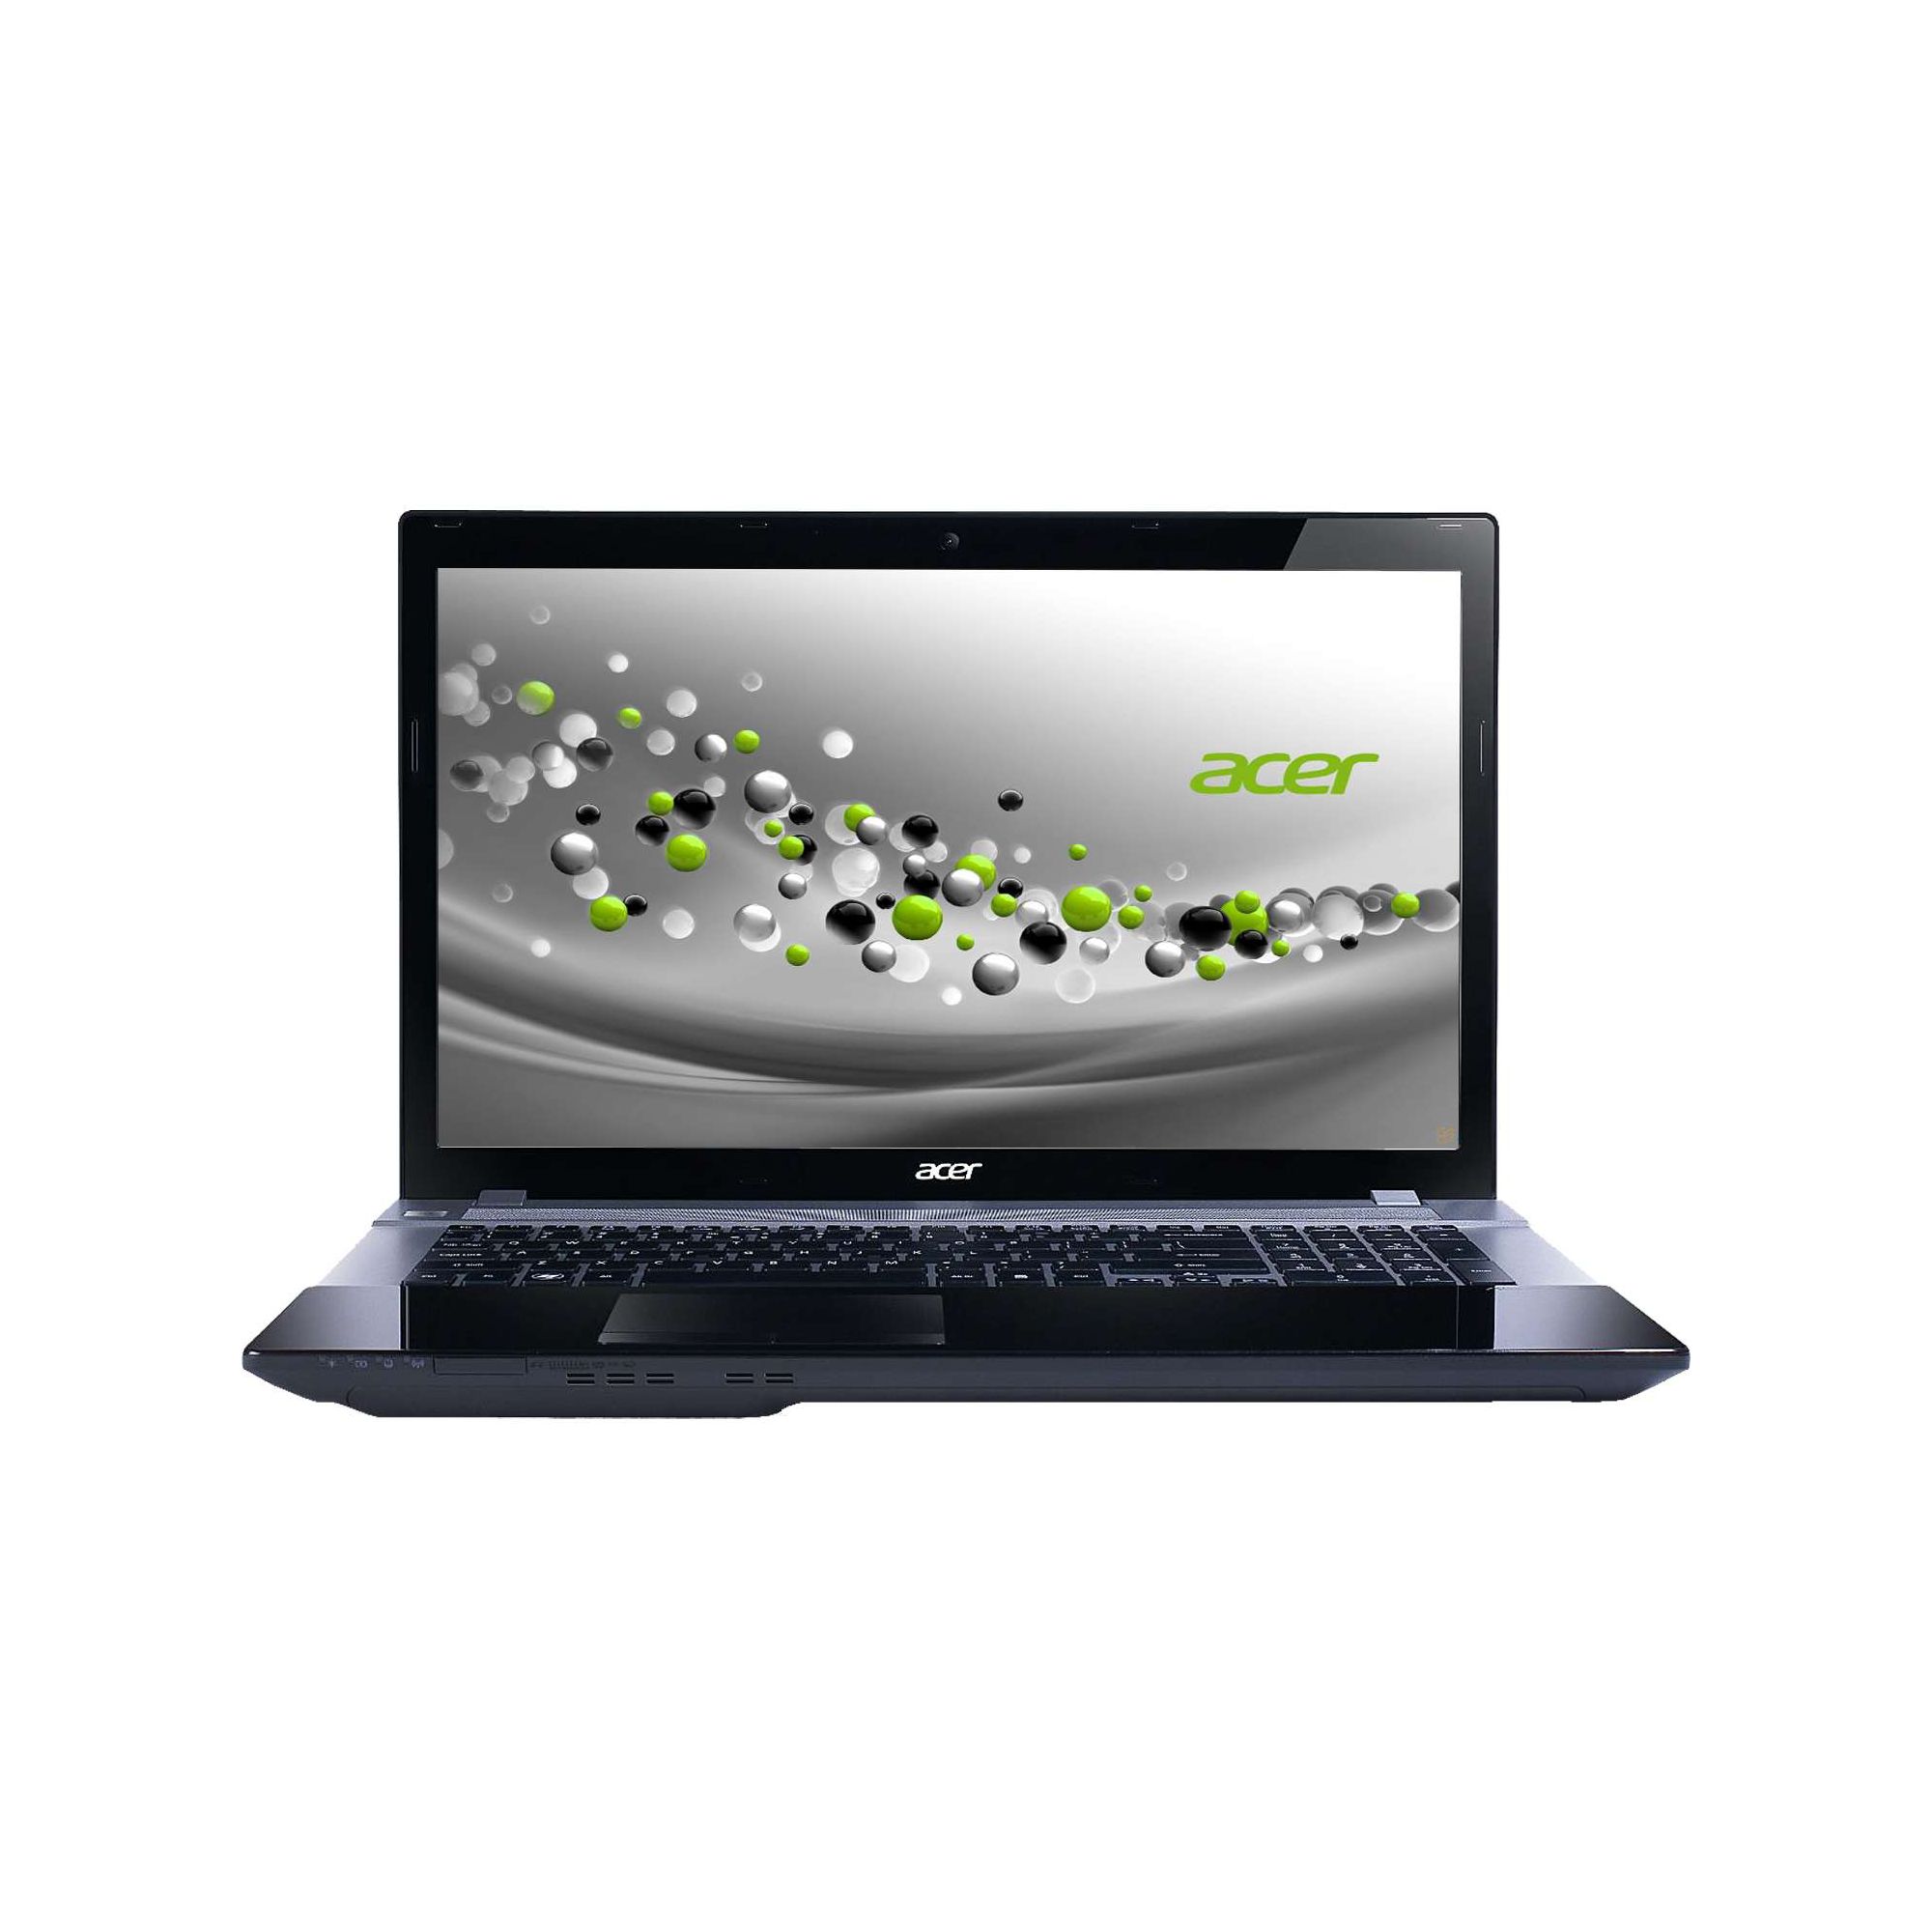 Acer Aspire V3-731-20204G50Makk (17.3 inch) Notebook Pentium 2.4GHz 4GB 500GB Windows 8